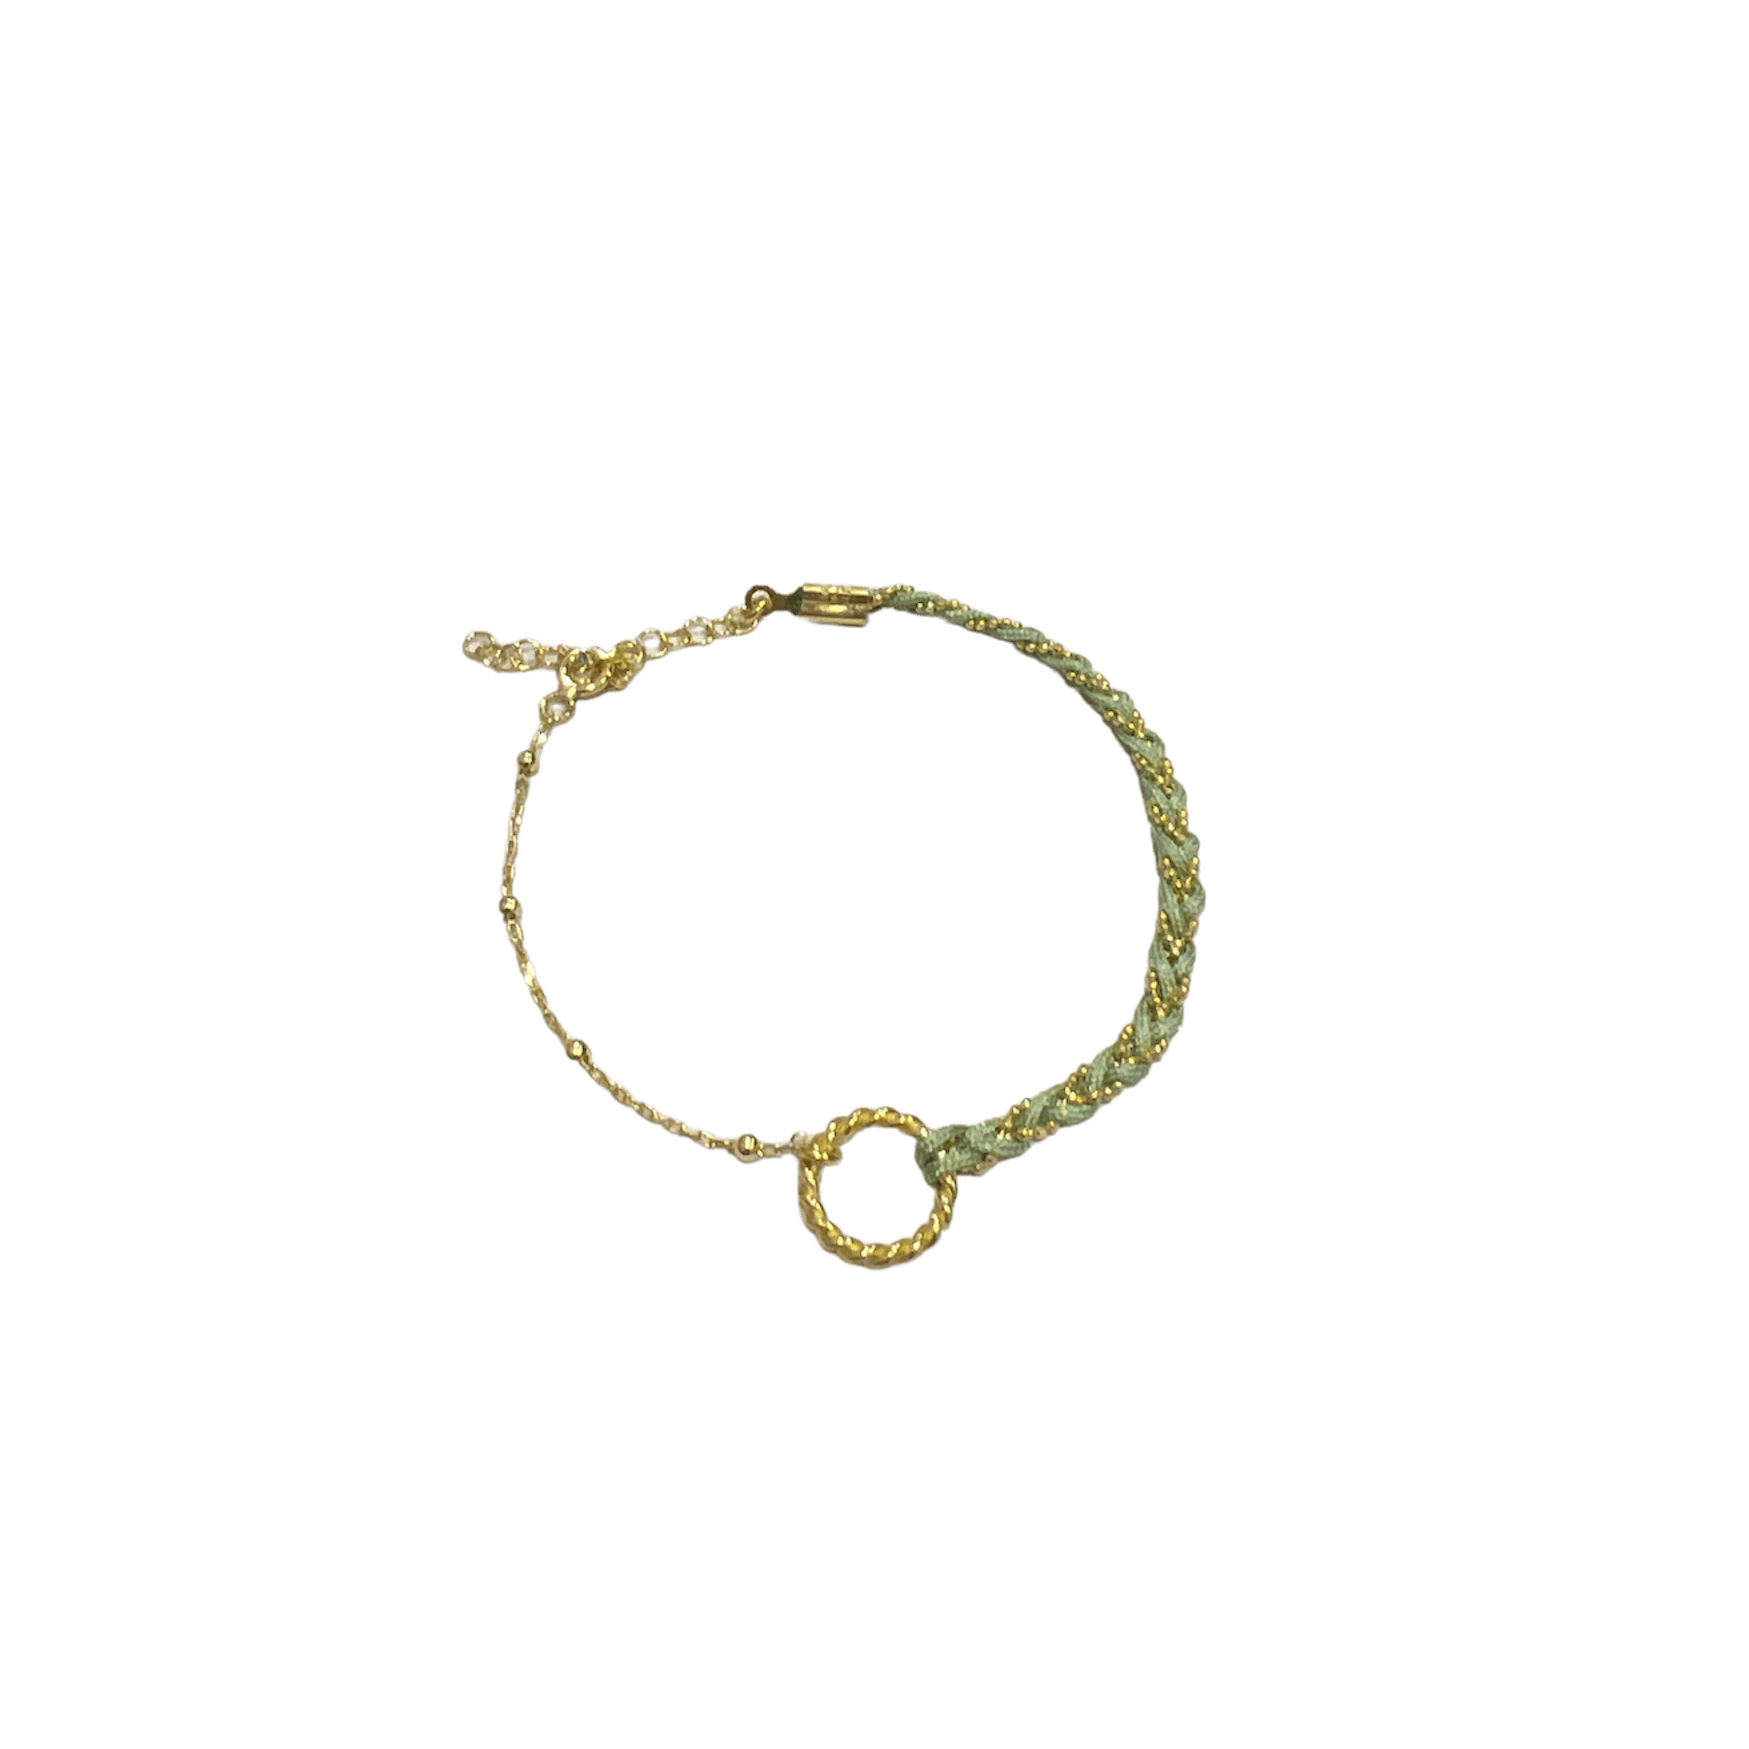 Women’s Handmade Rope Braided Sterling Silver Beaded Chain Friendship Bracelet - Green Spero London